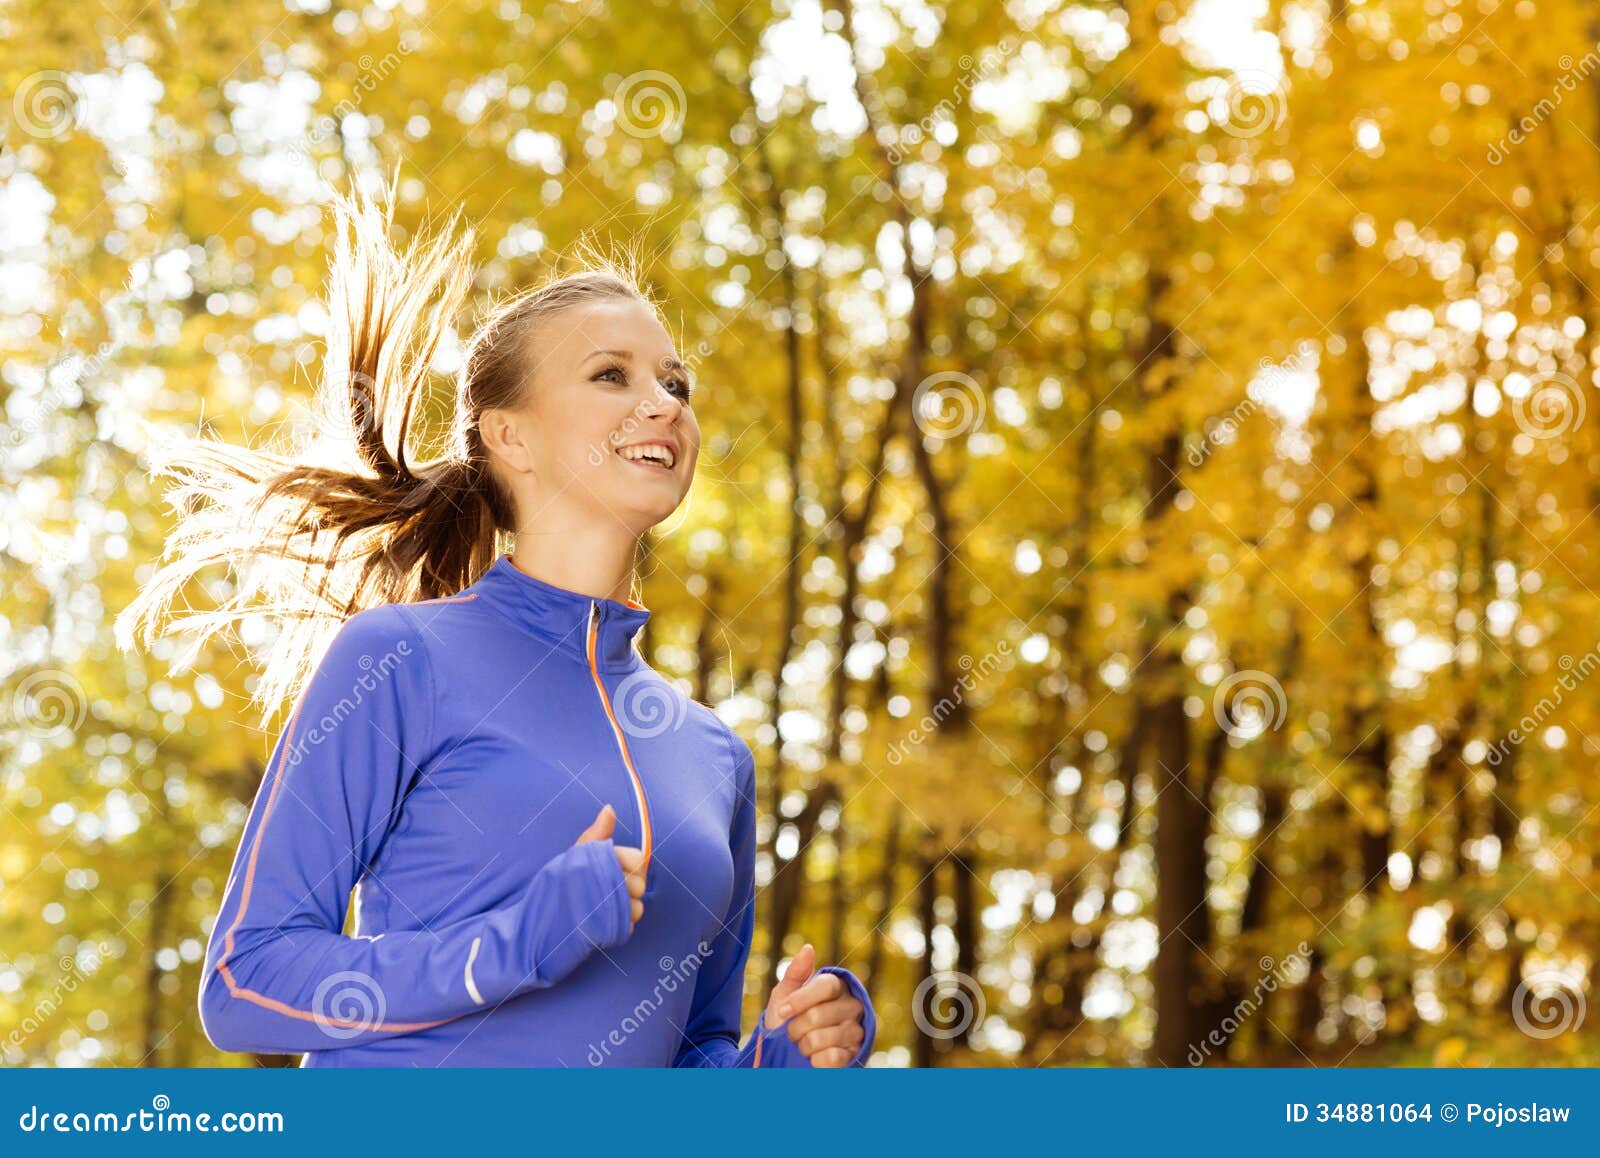 Runner stock photo. Image of leisure, marathon, active - 34881064